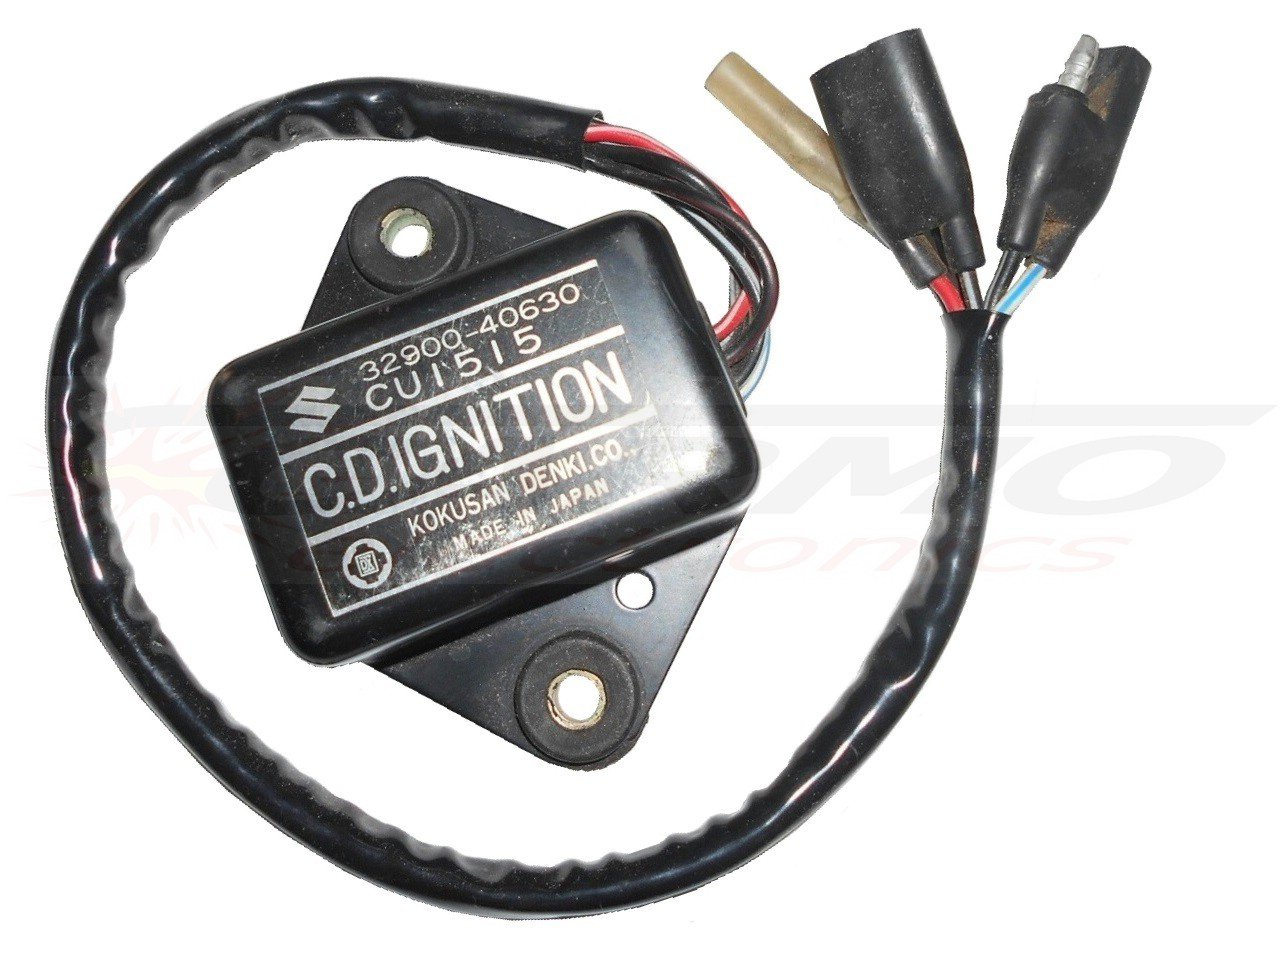 PE250 PE400 igniter ignition module CDI Box (CU1515, 32900-40603, 32900-40920, C.D.IGNITION)